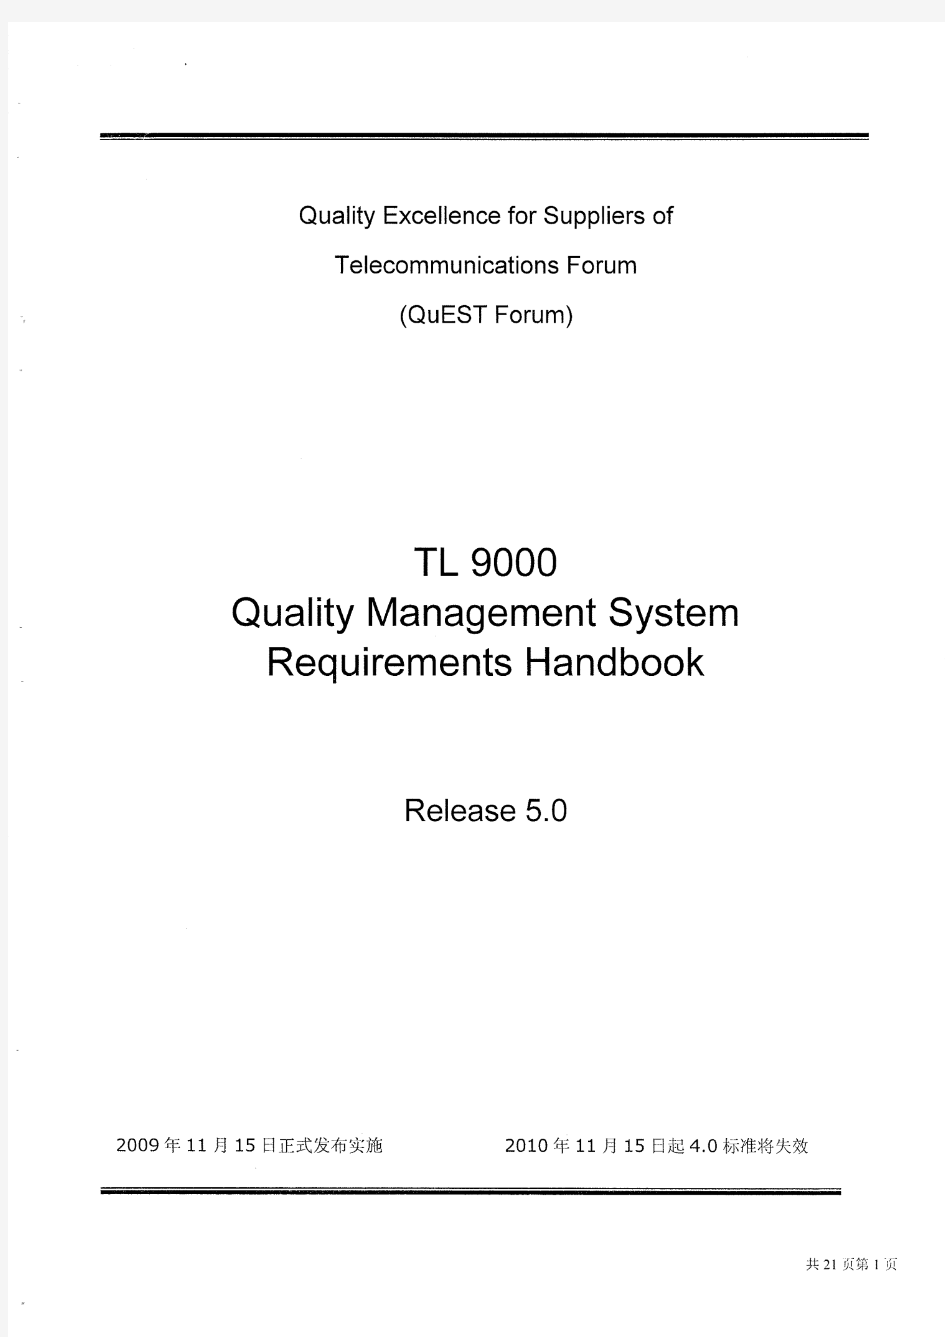 TL9000质量管理体系要求手册简体5.0版